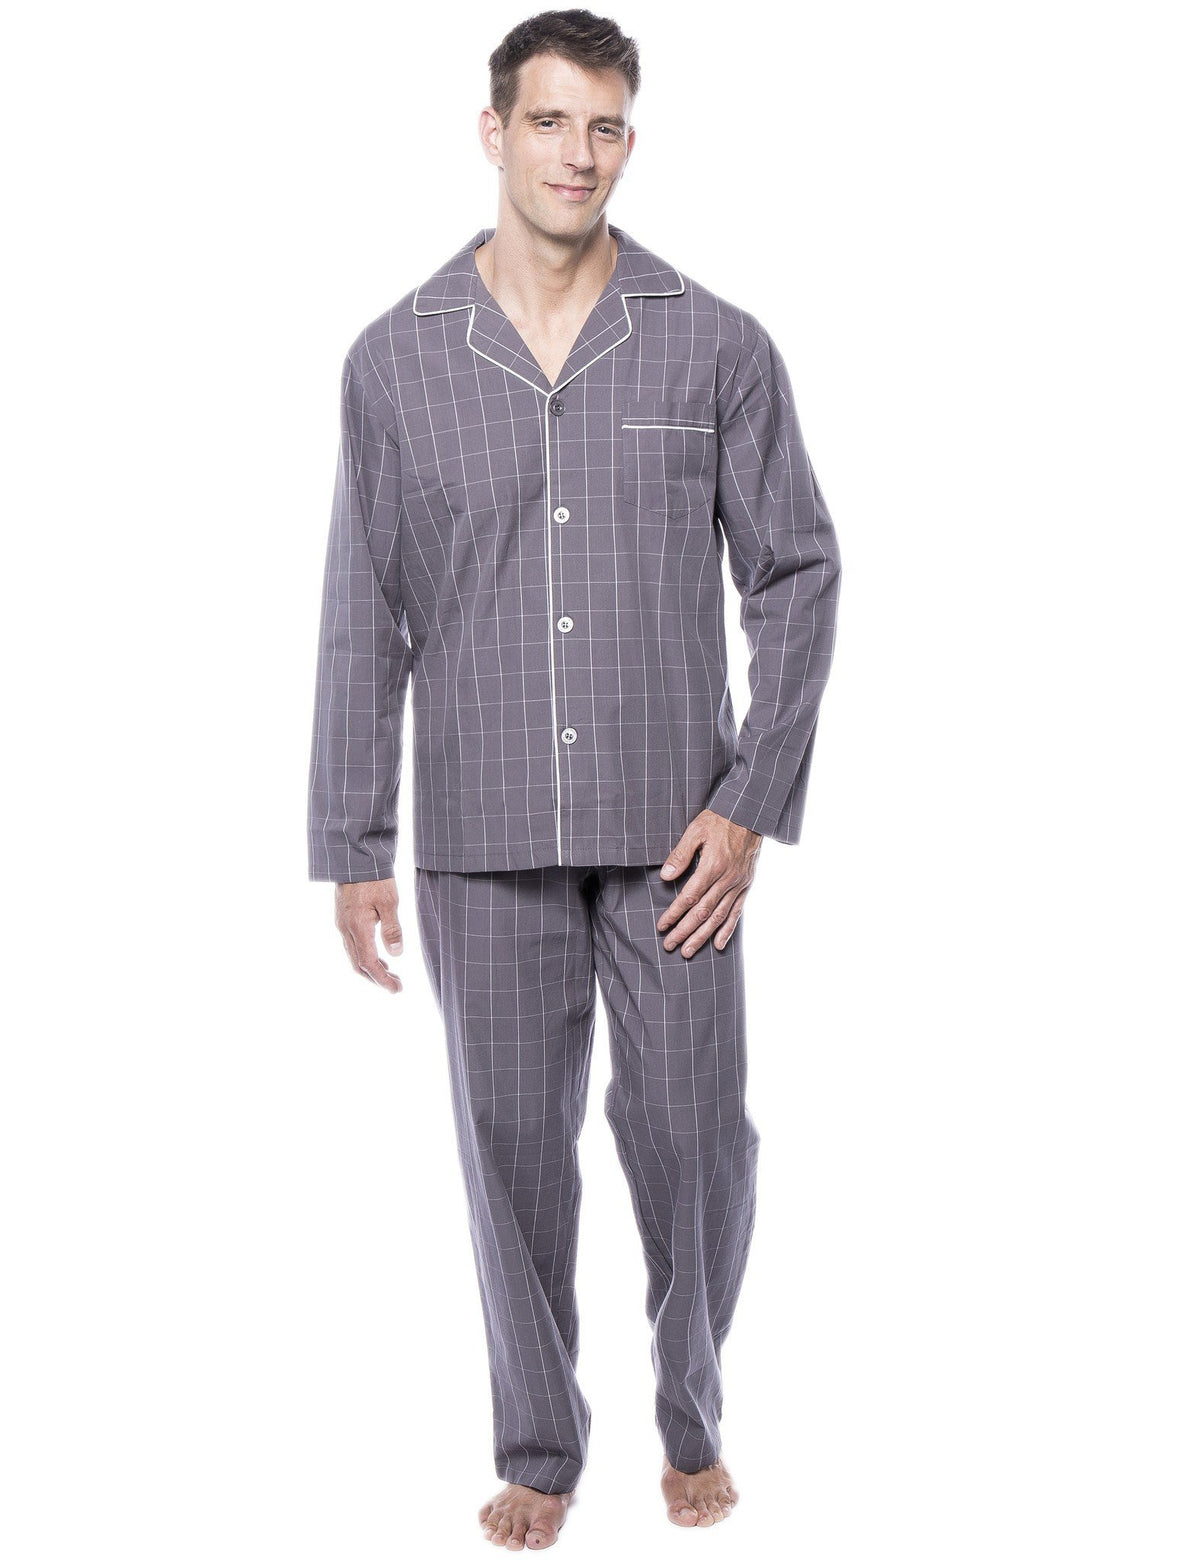 Men's 100% Woven Cotton Pajama Sleepwear Set - Windowpane Checks Grey